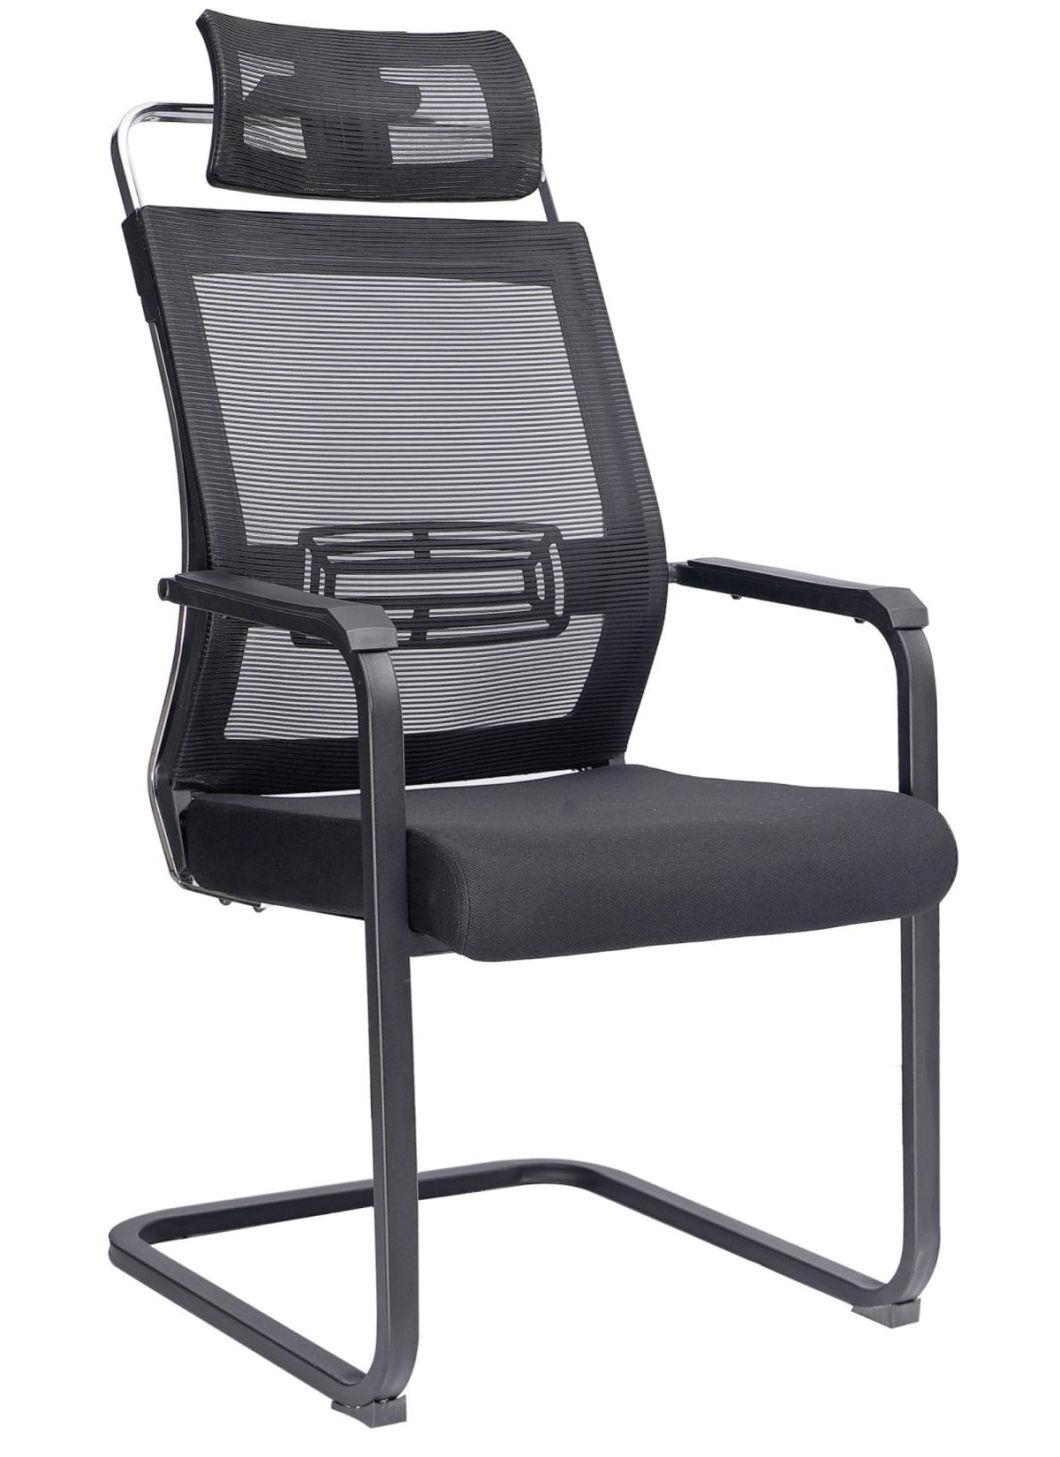 Elegant Chrome Steel Staff Training Meeting Office Mesh Chairs